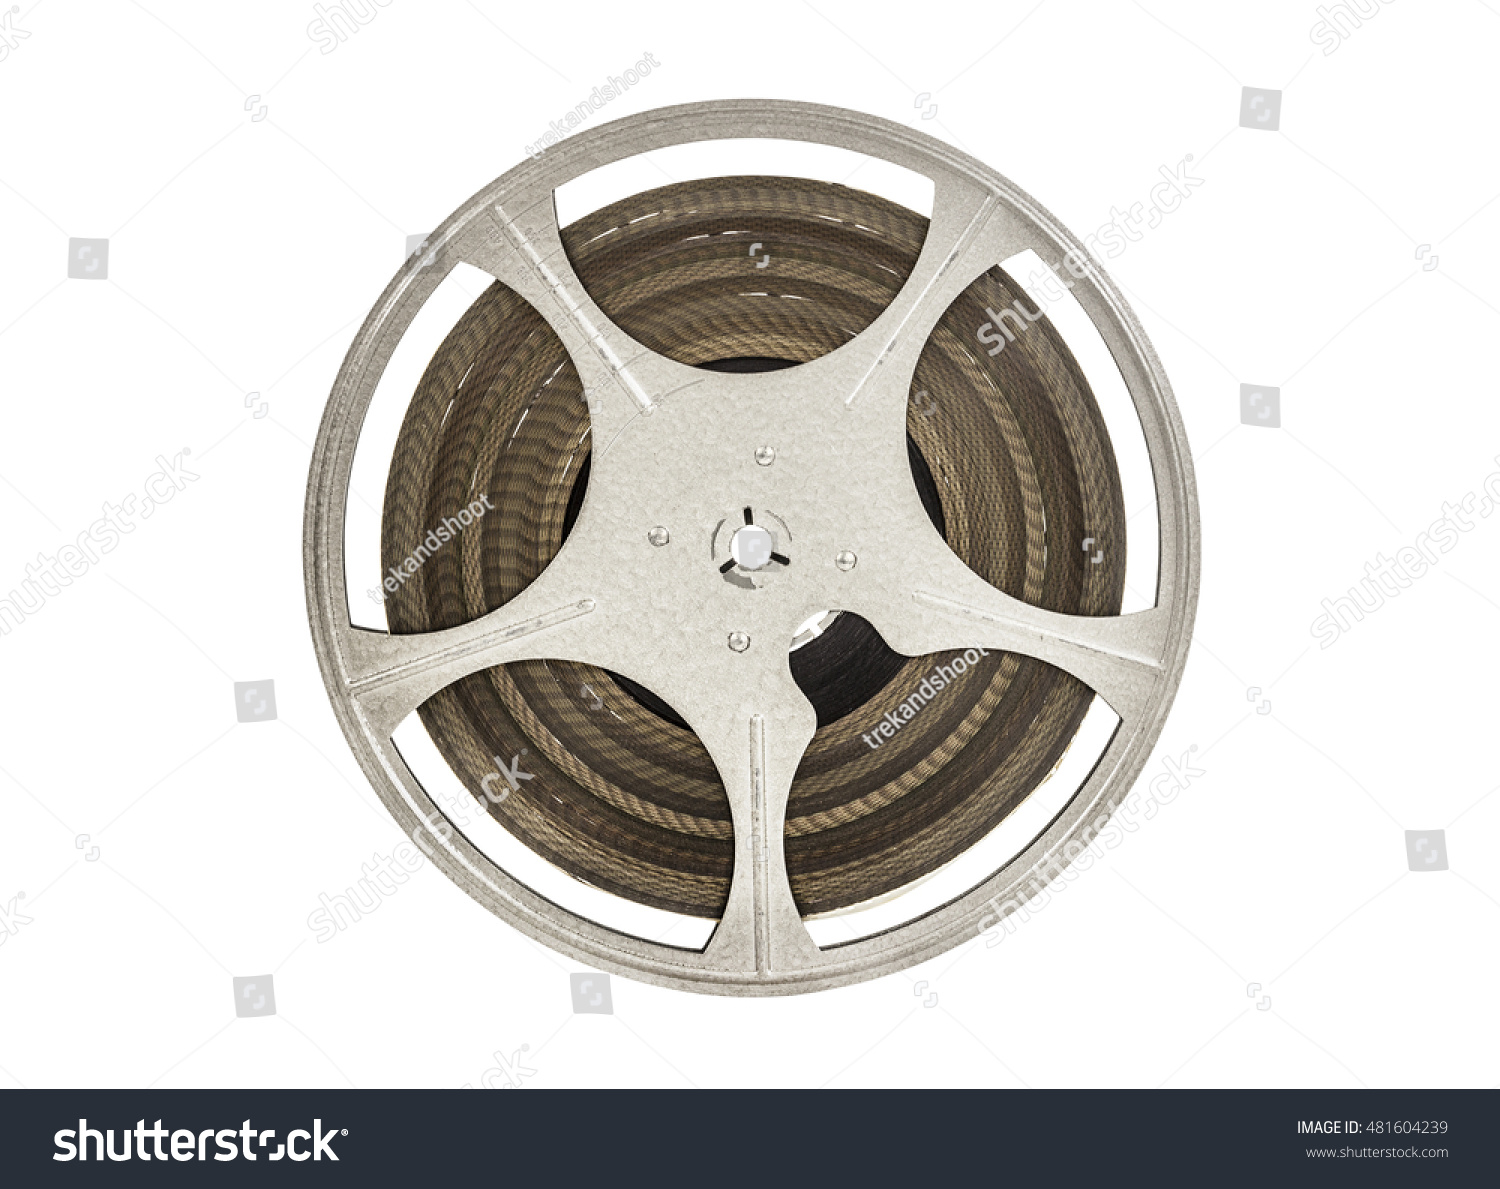 Vintage 8 mm movie film reel isolated on white. #481604239